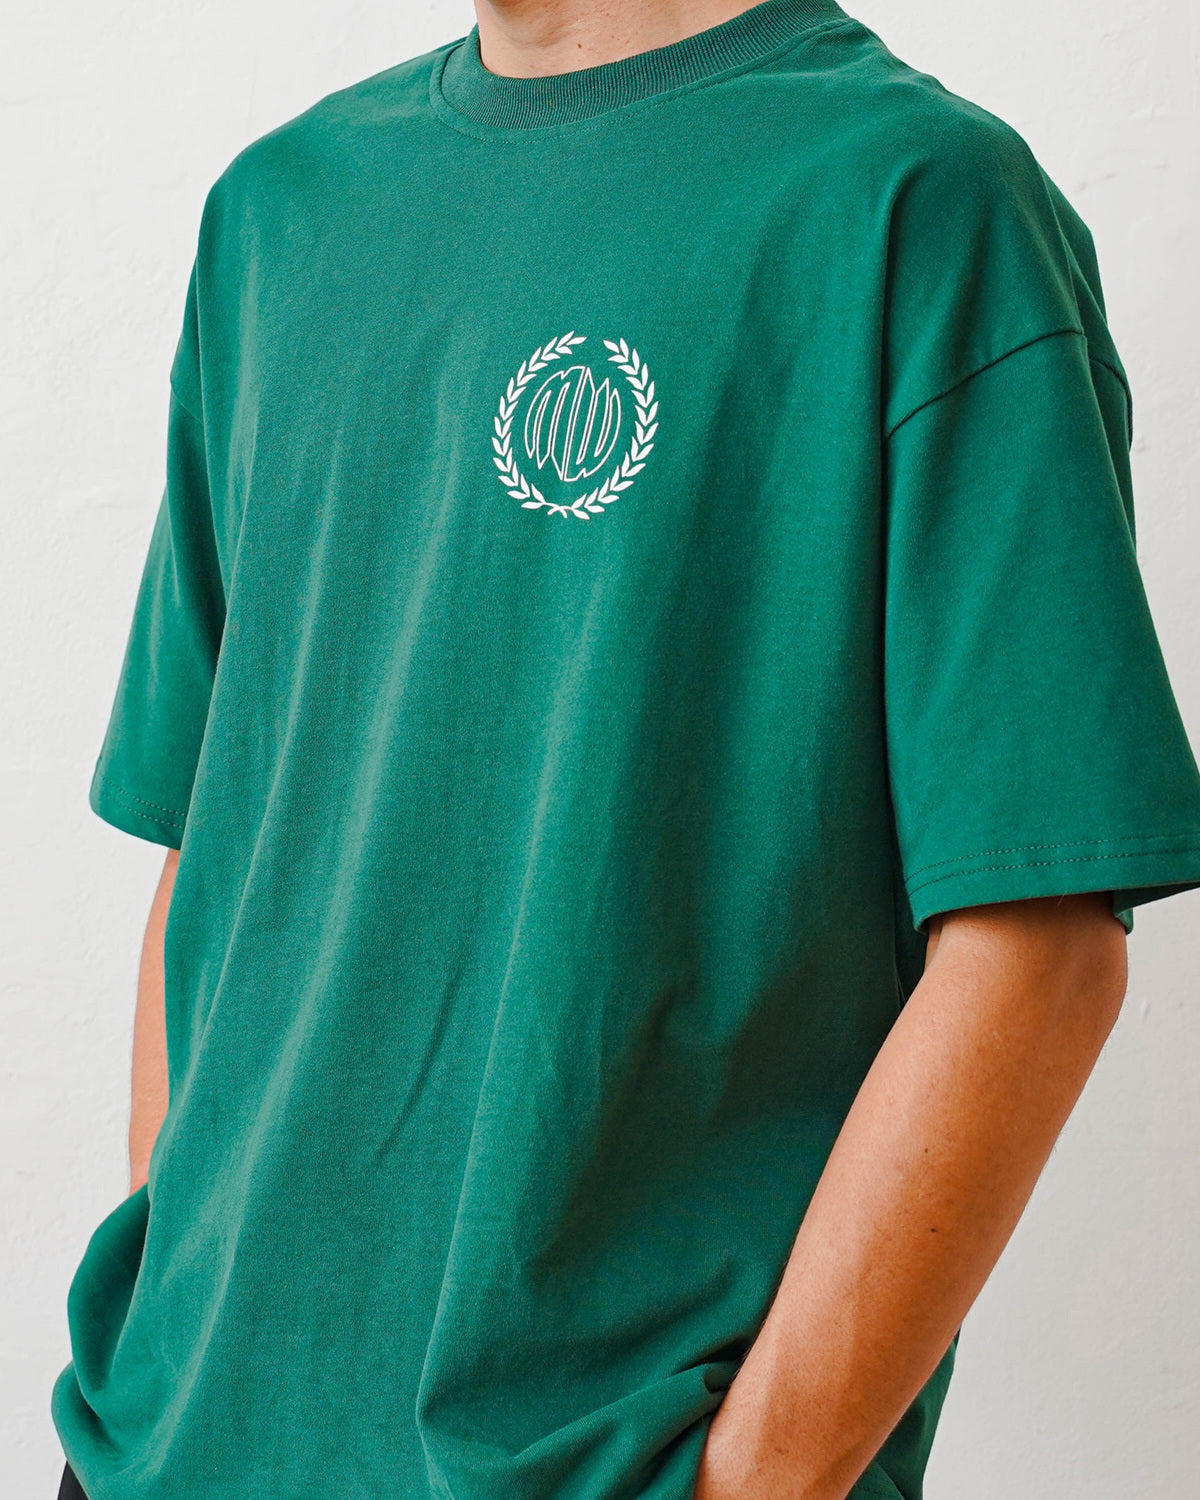 Laurel Ambigram T-Shirt - Racing Green